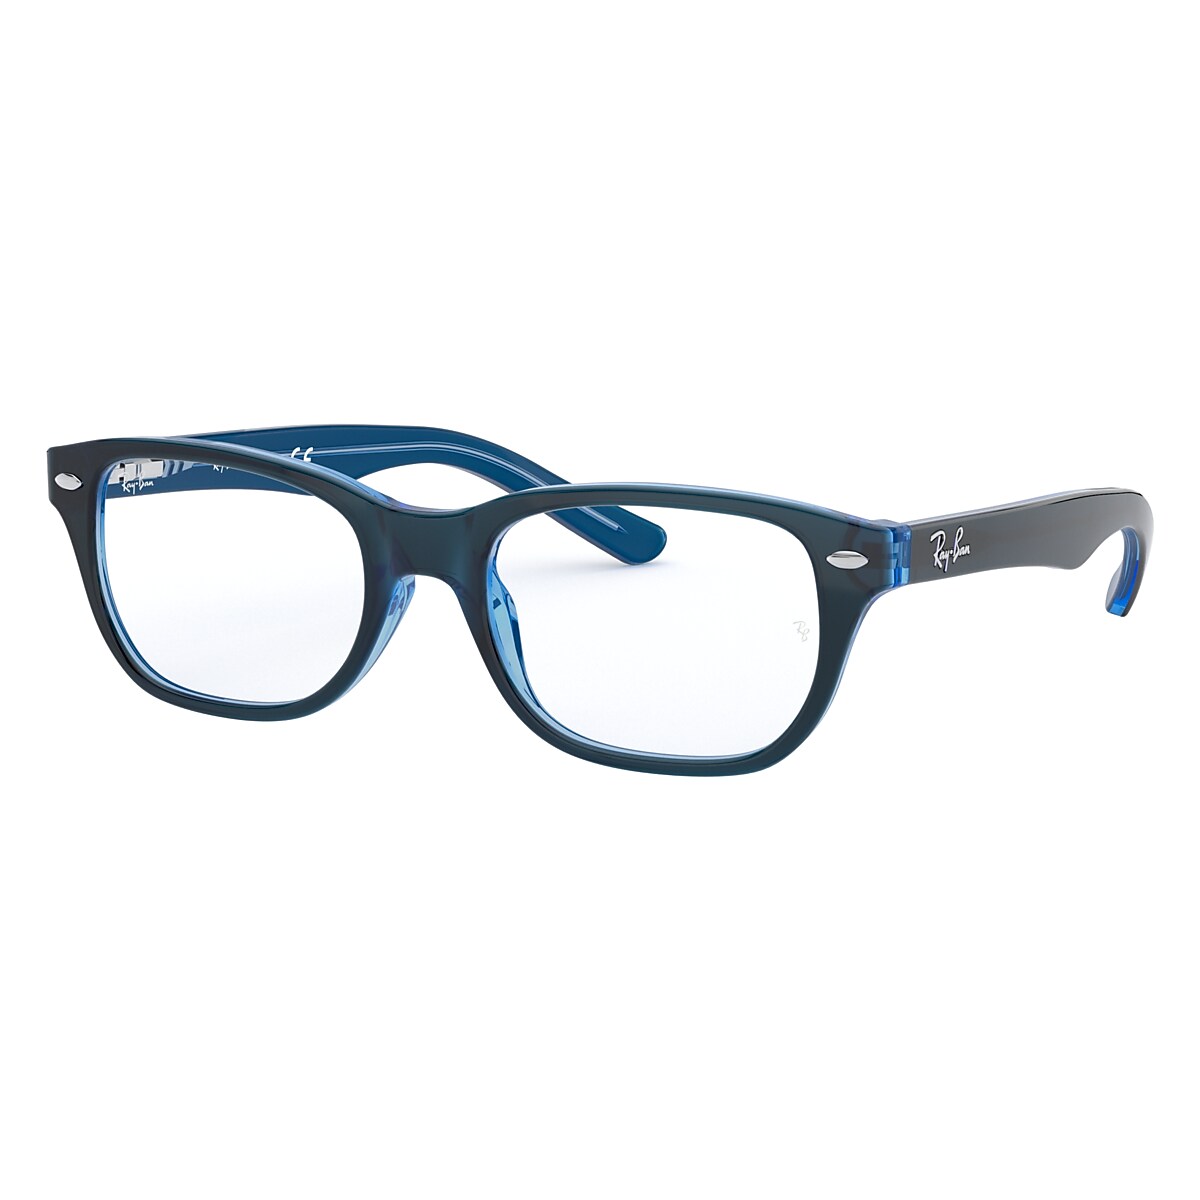 RB1555 OPTICS KIDS Eyeglasses with Blue Frame - RY1555 | Ray 